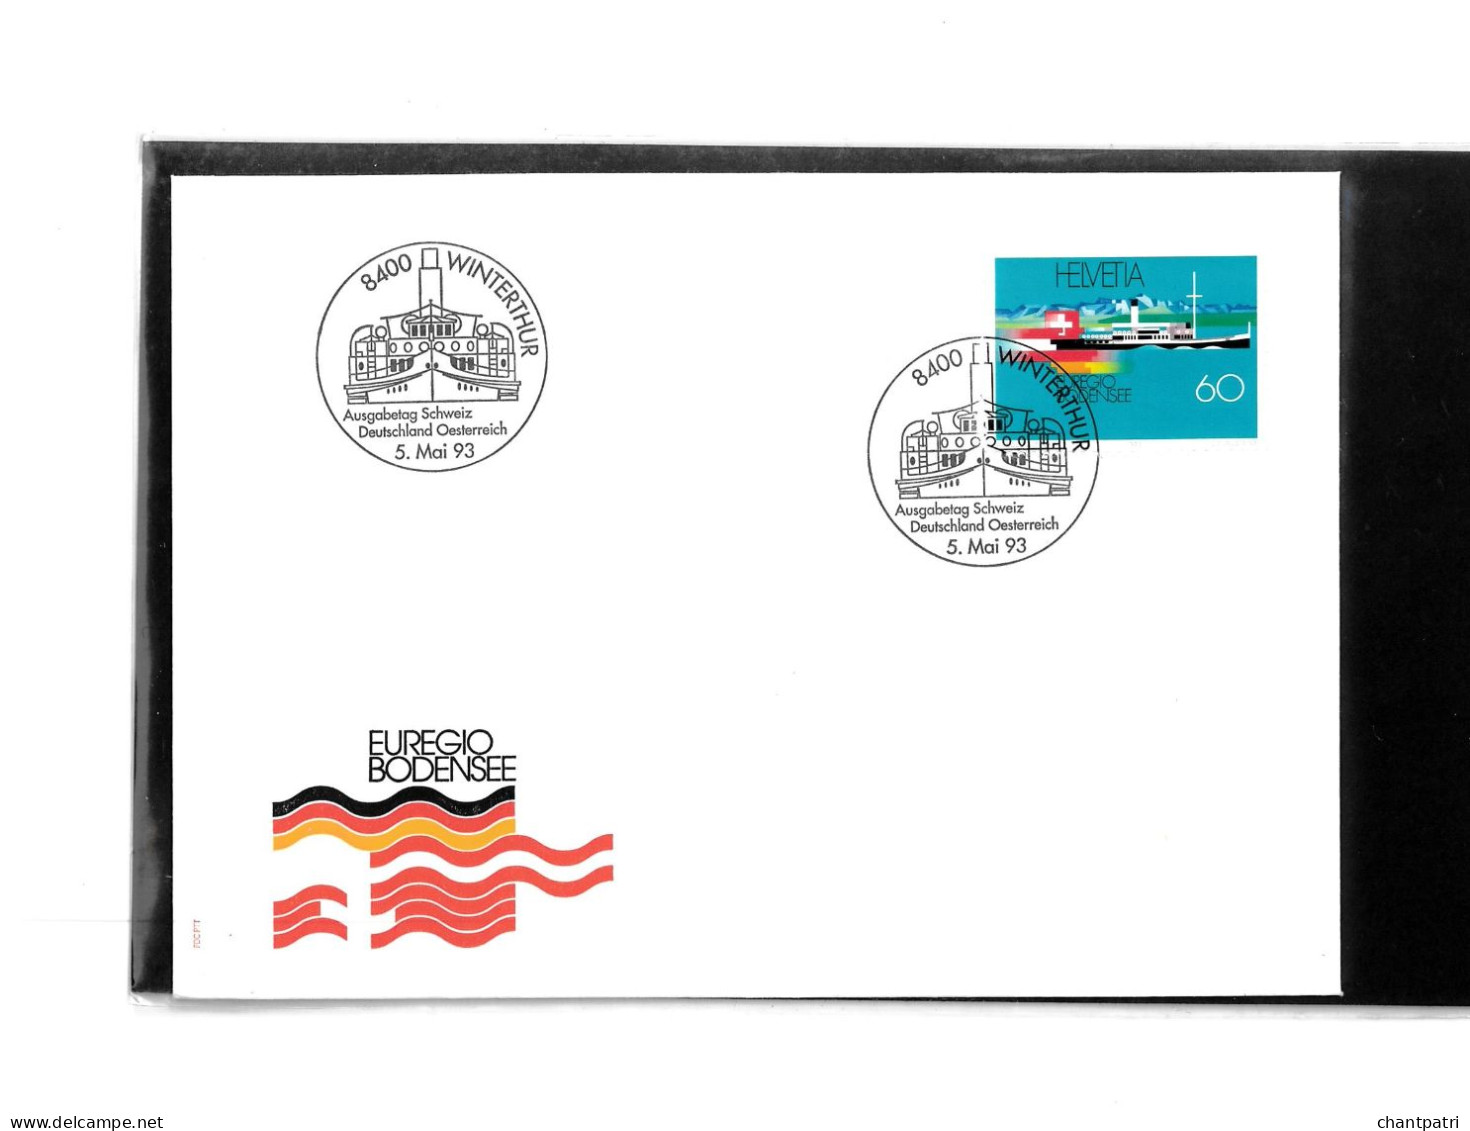 8400 Winterthur - Euregio Bodensee - 05 05 1993 - Beli FDC 054 - Covers & Documents